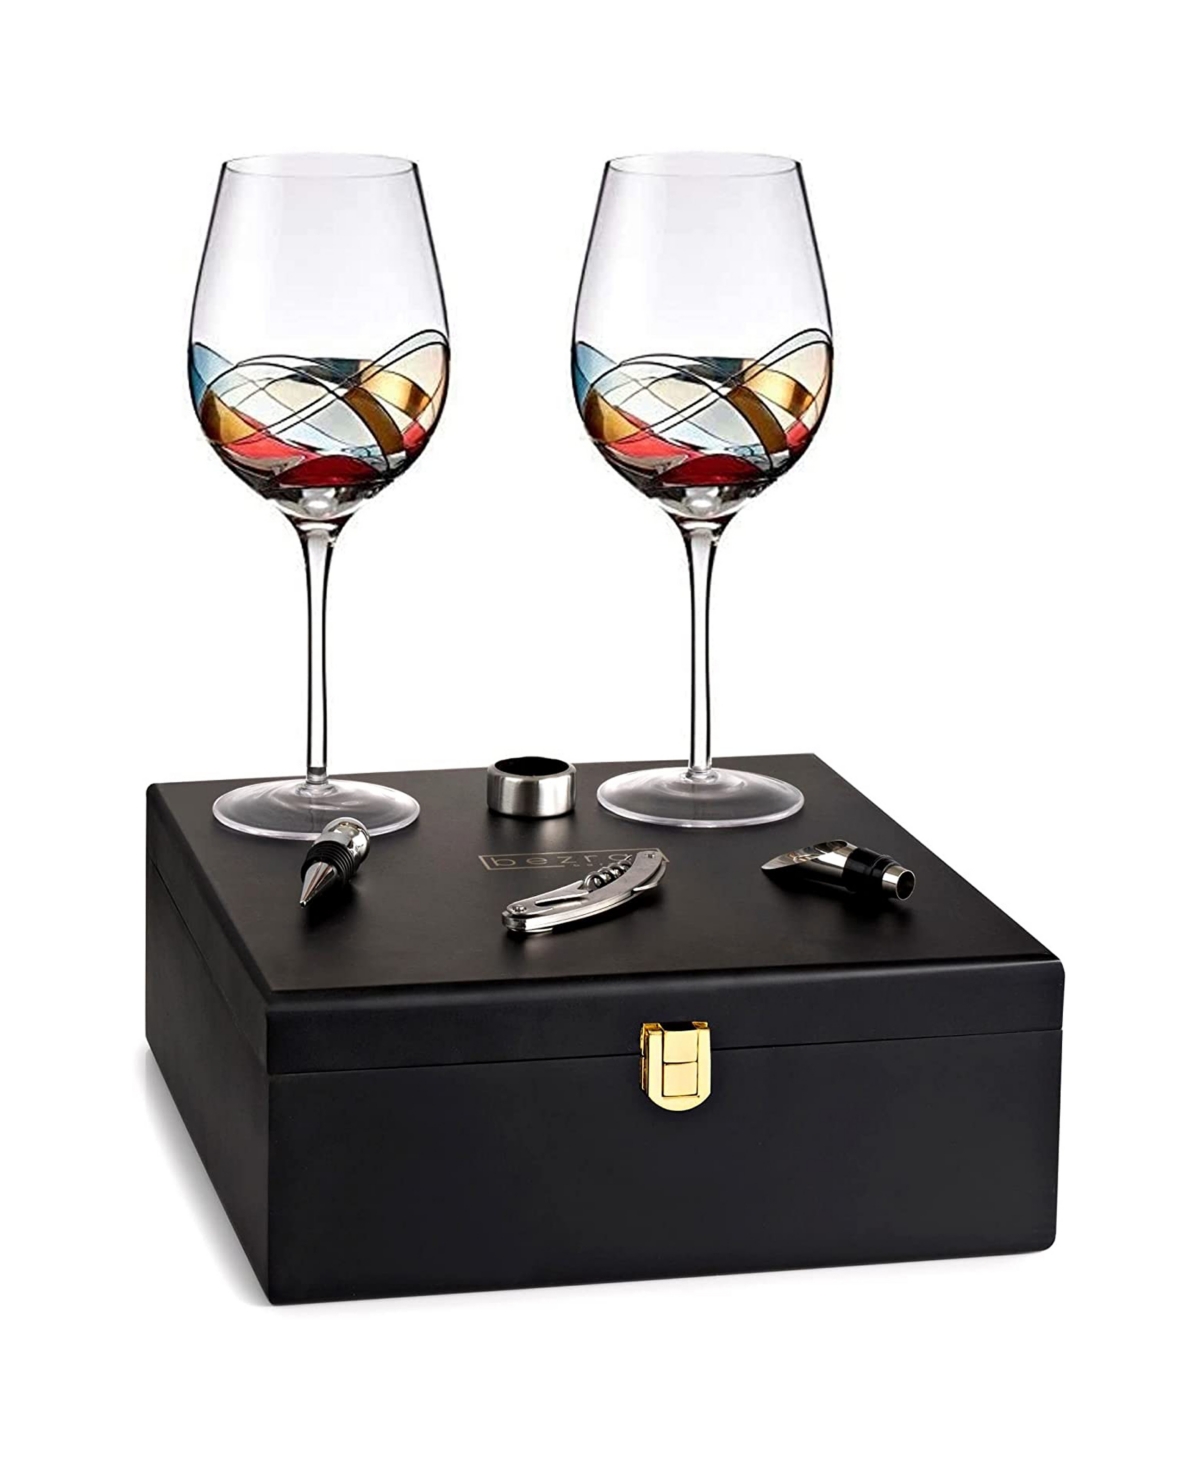 Bezrat Wine Glass Gift Set, 7 Piece In Red